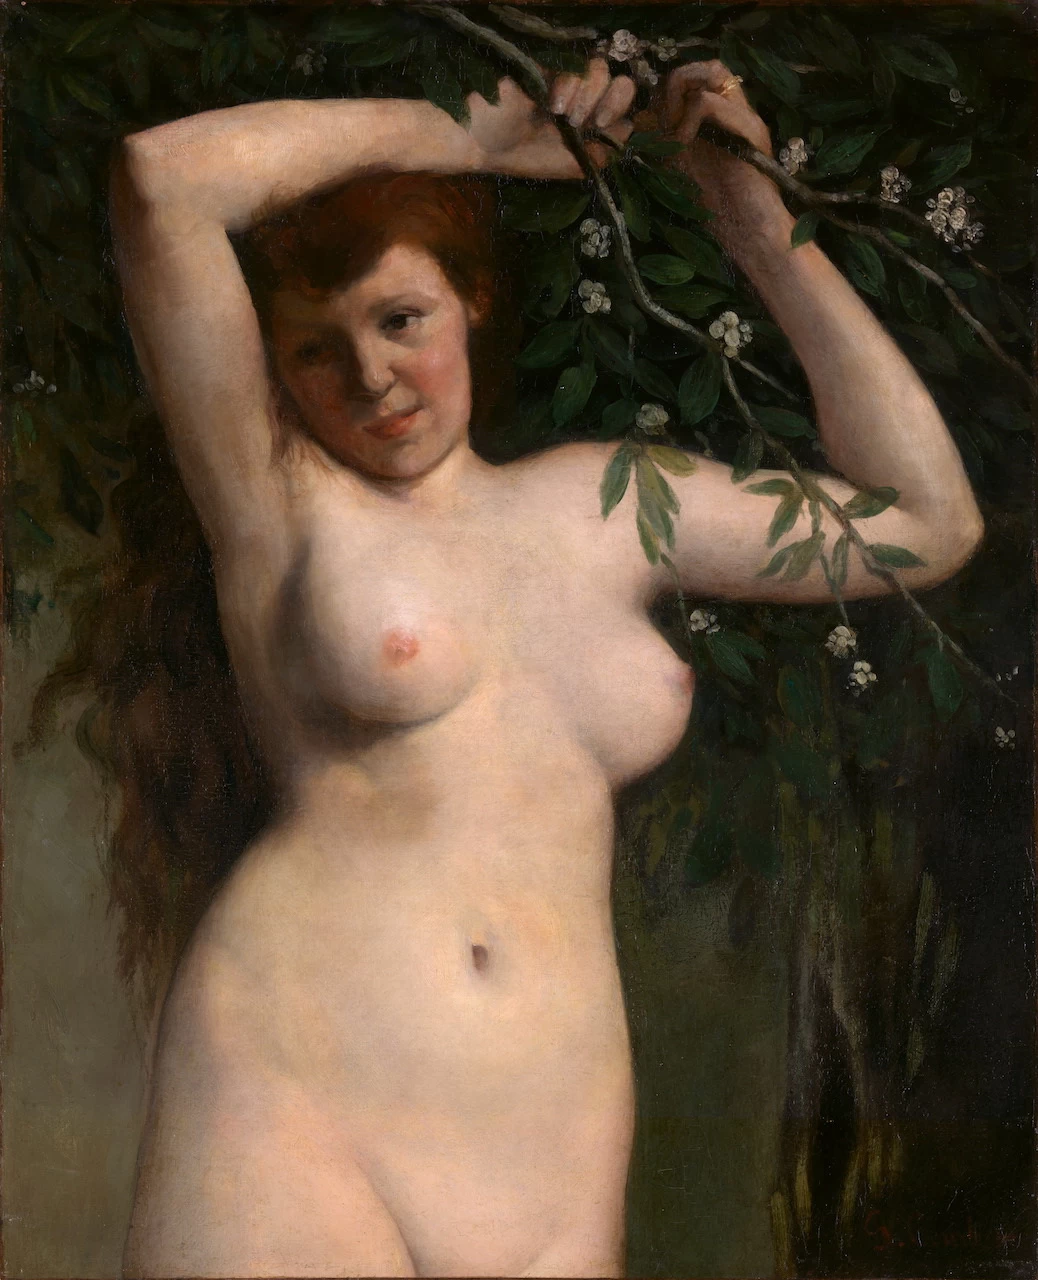  191-Nudo con ramo fiorito-Metropolitan Museum of Art-New York 